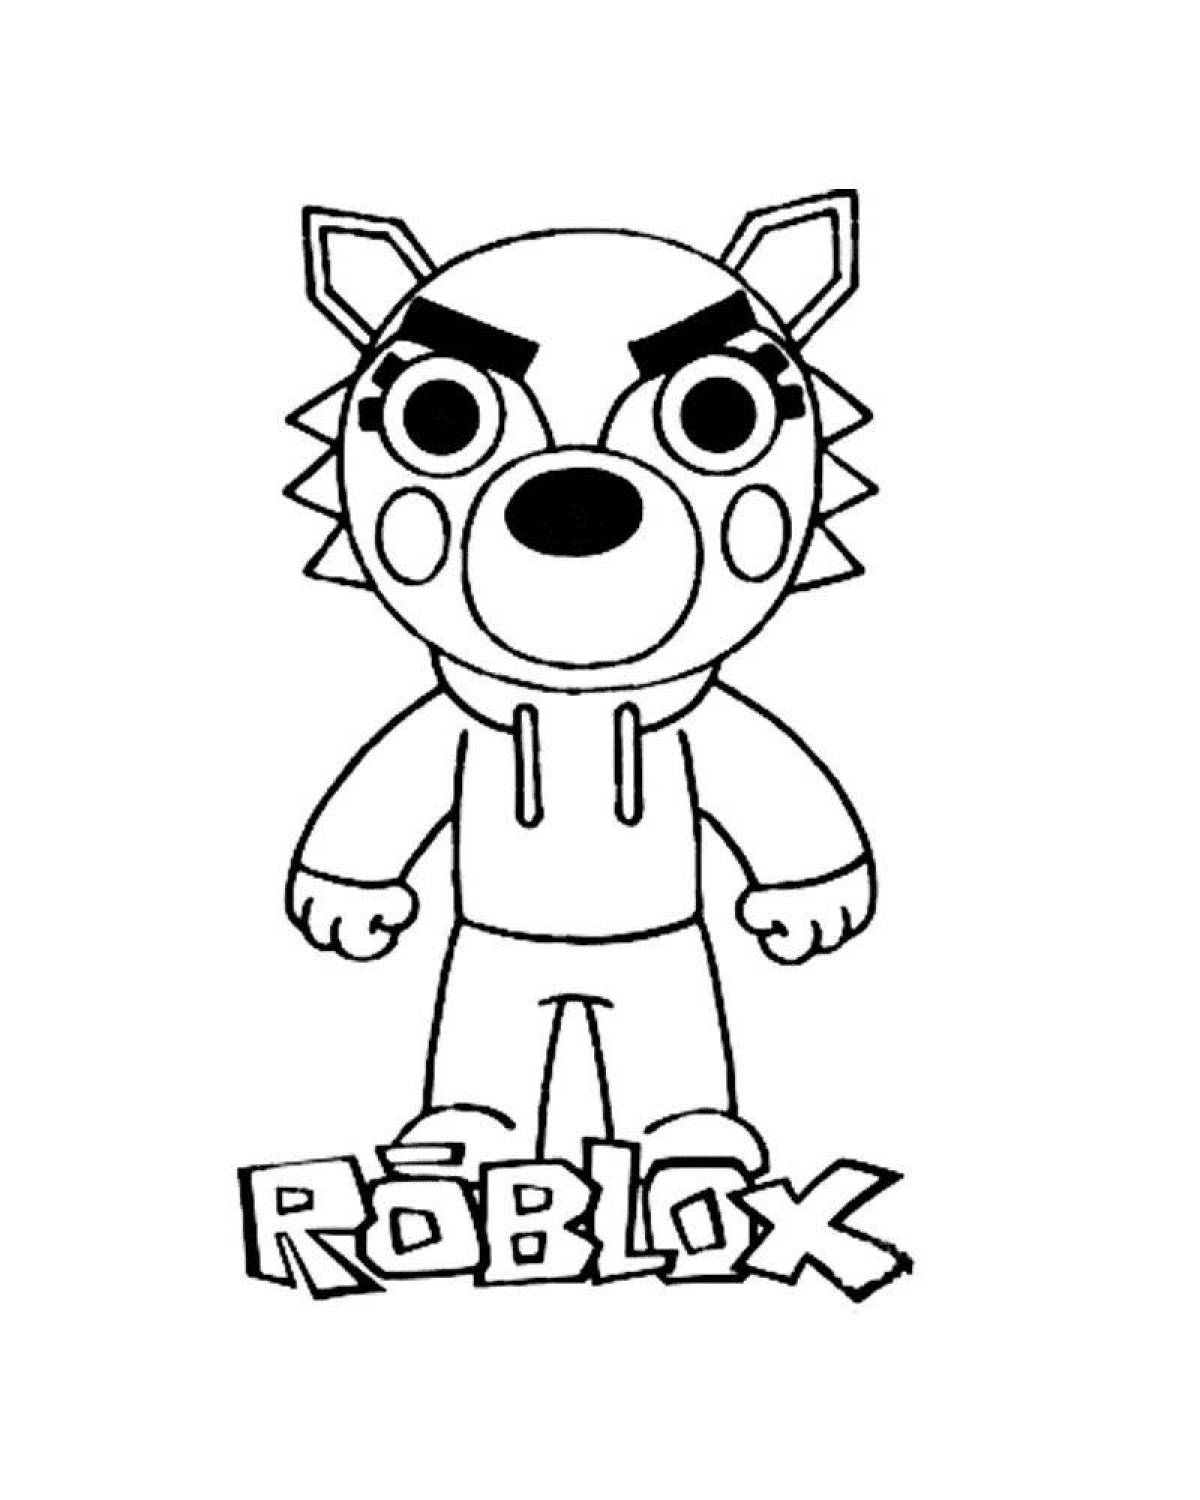 Roblox piggy #5